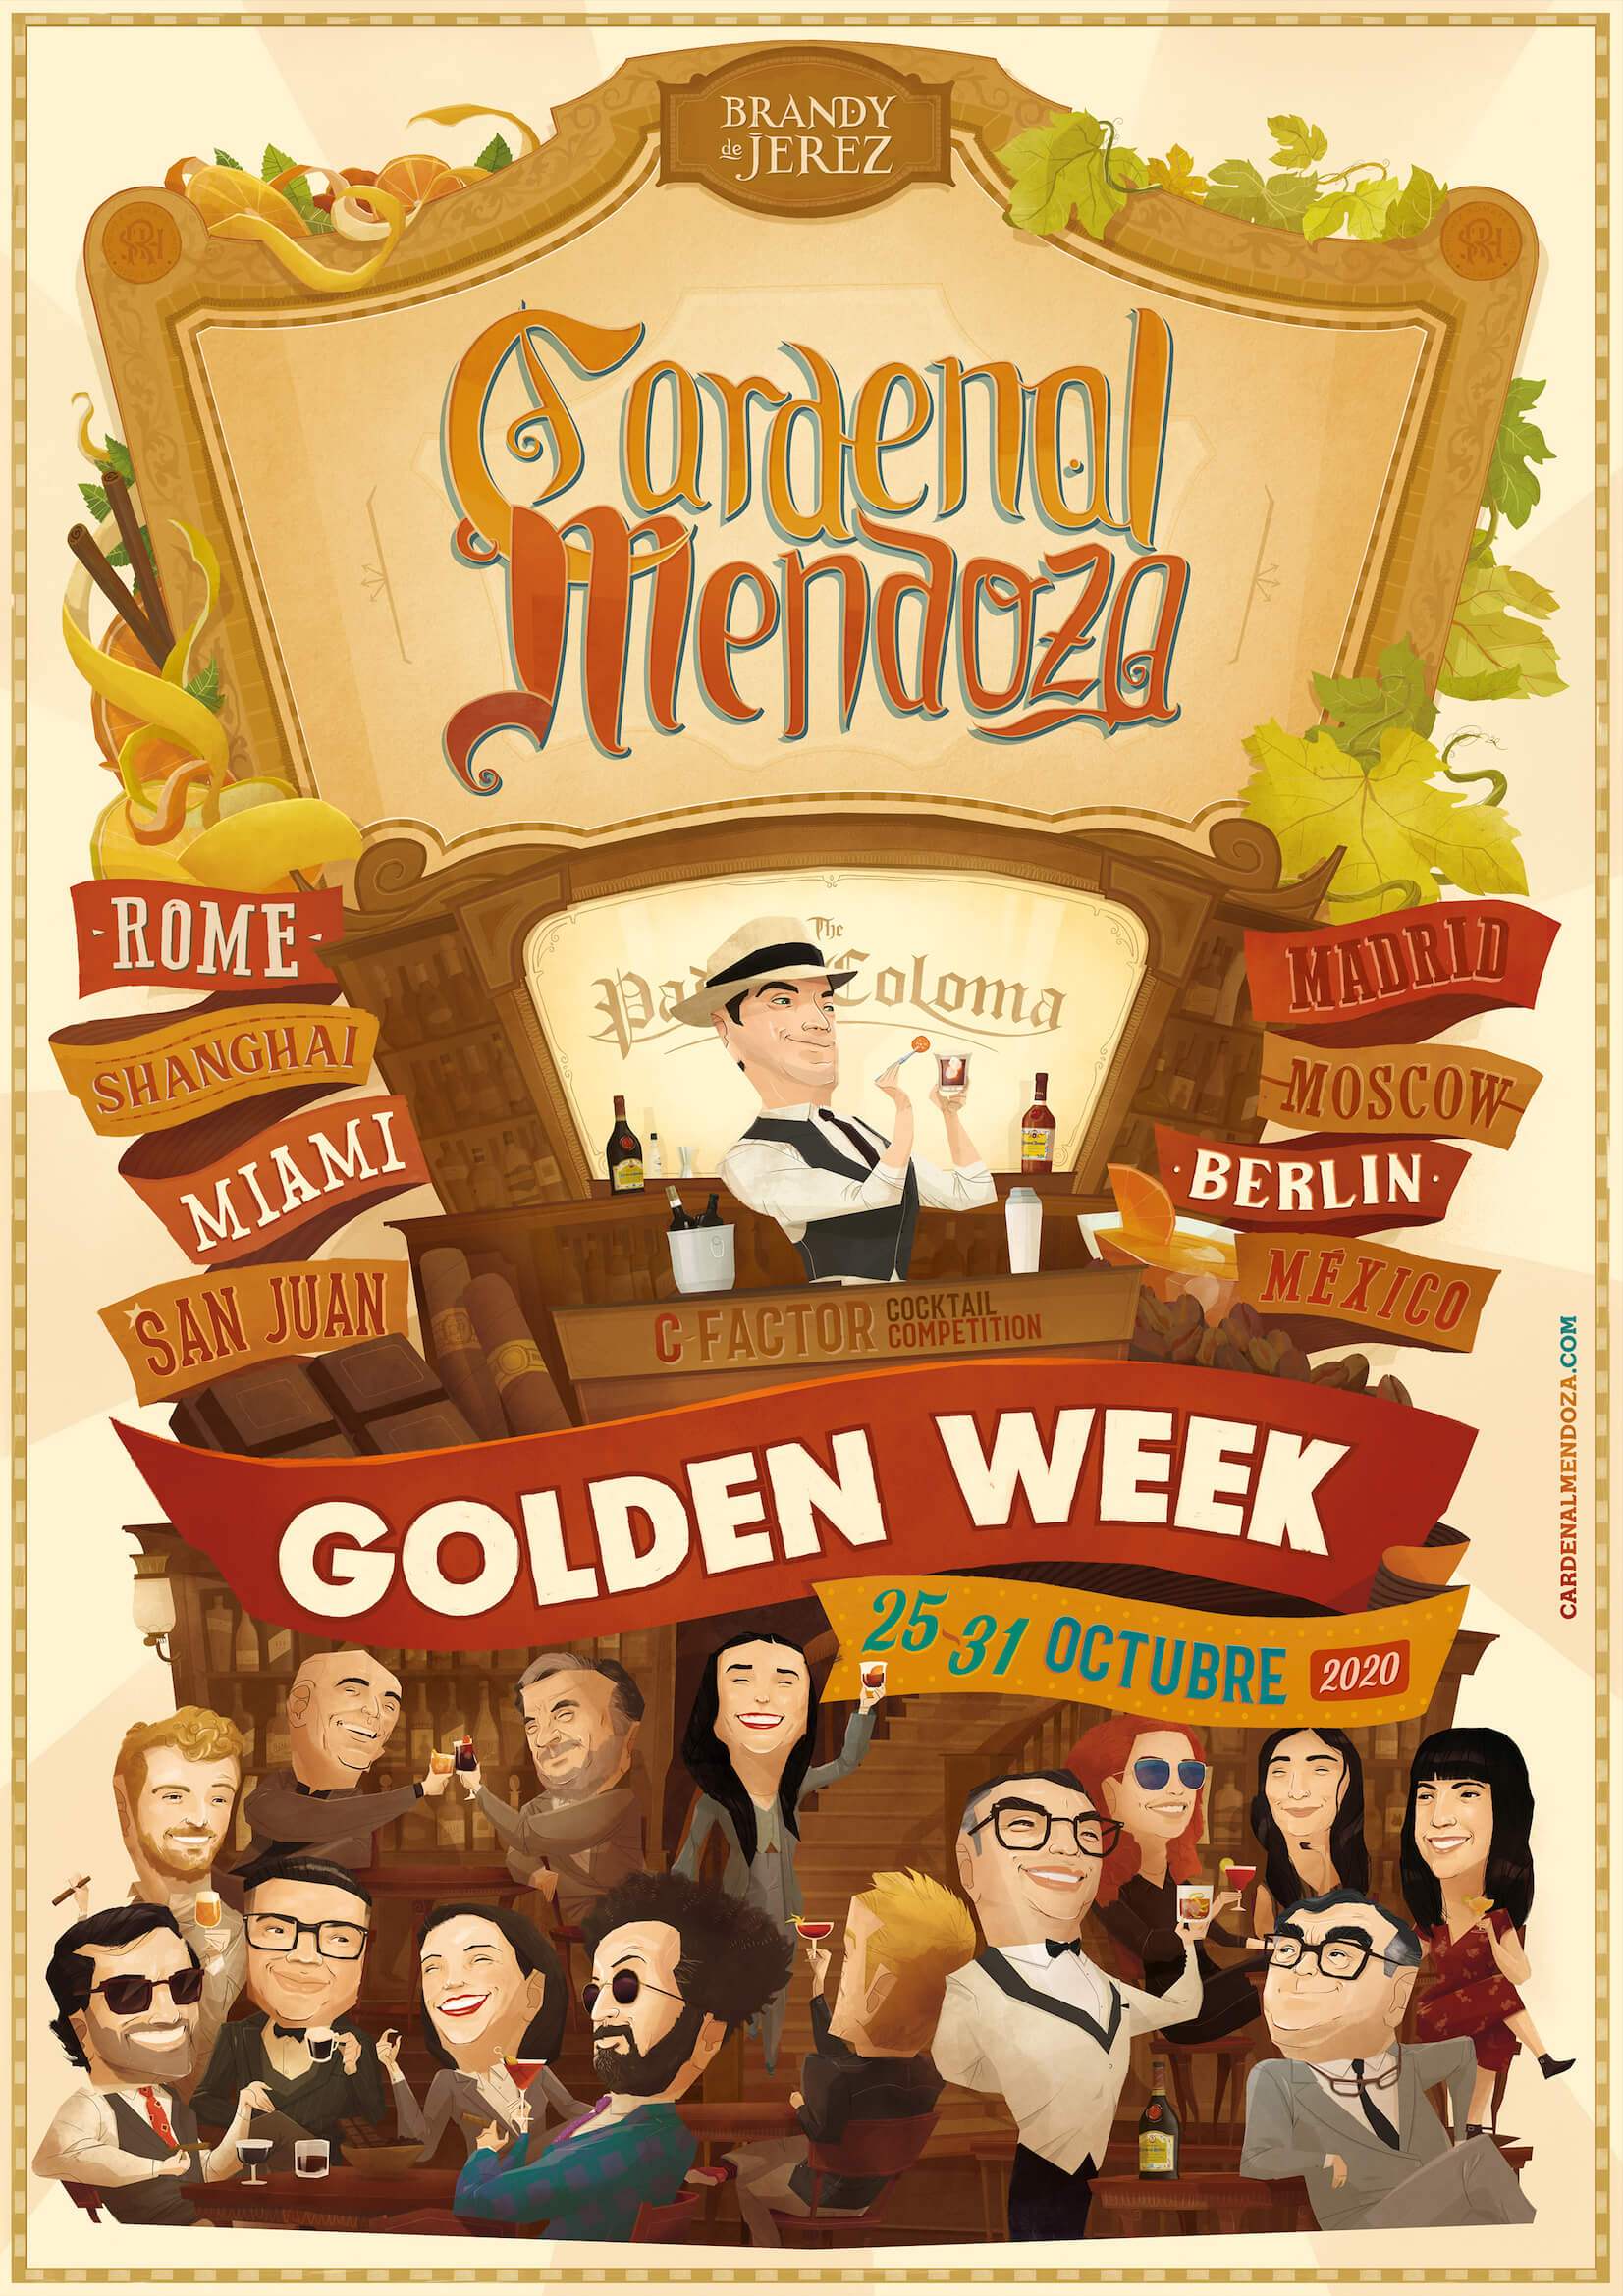 Cardenal Mendoza Golden Week 2020